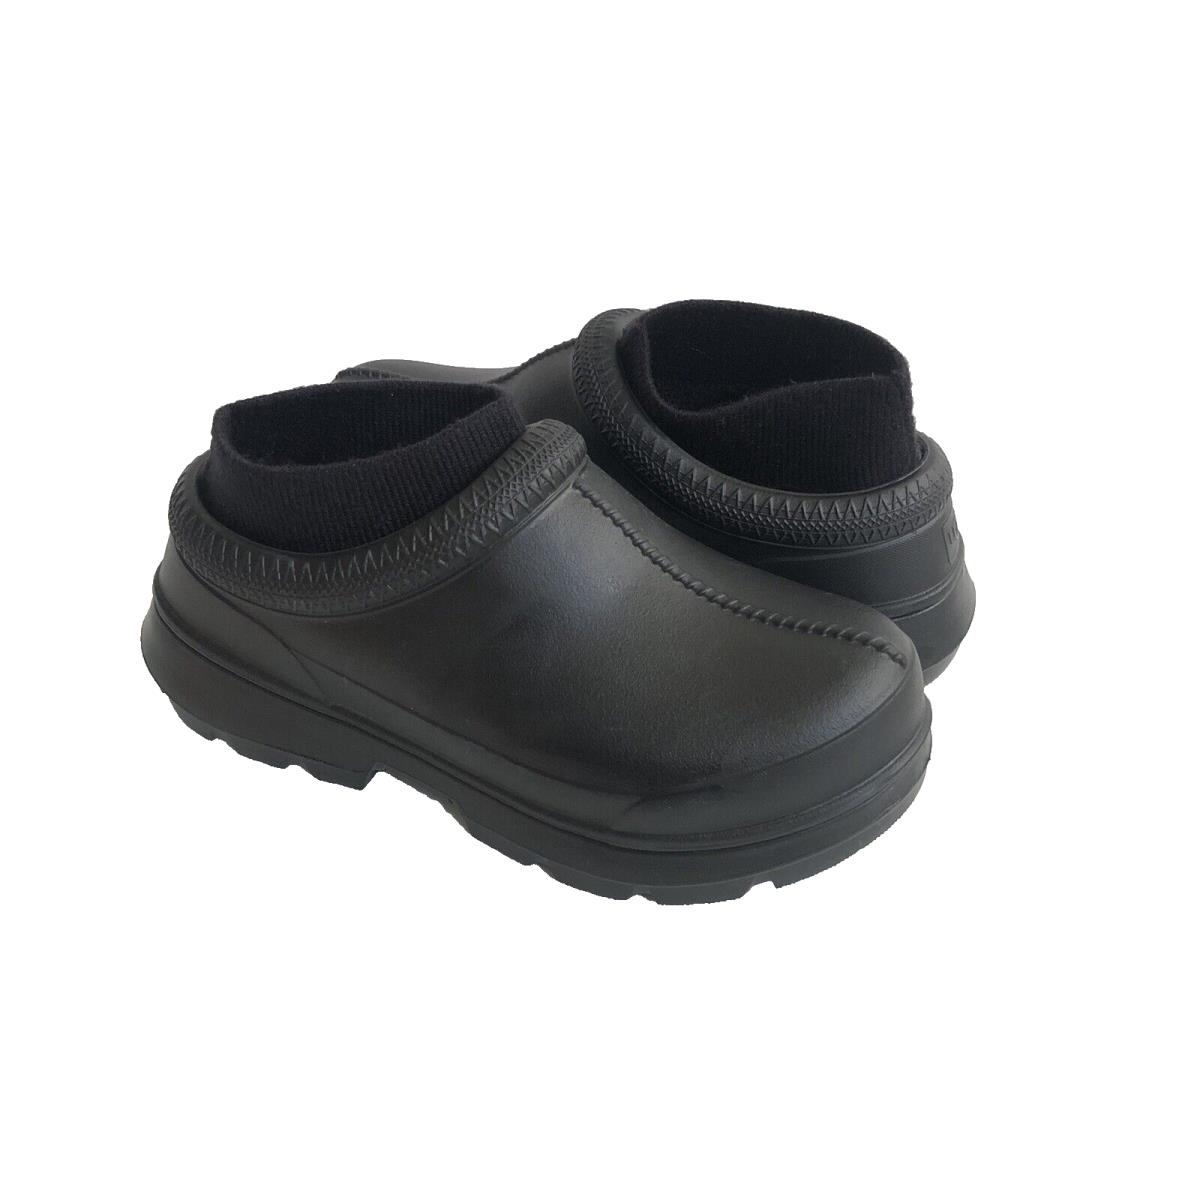 Ugg Women Tasman X Black Slip ON Moccasin Shoes US 9 / EU 40 / UK 7 - Black